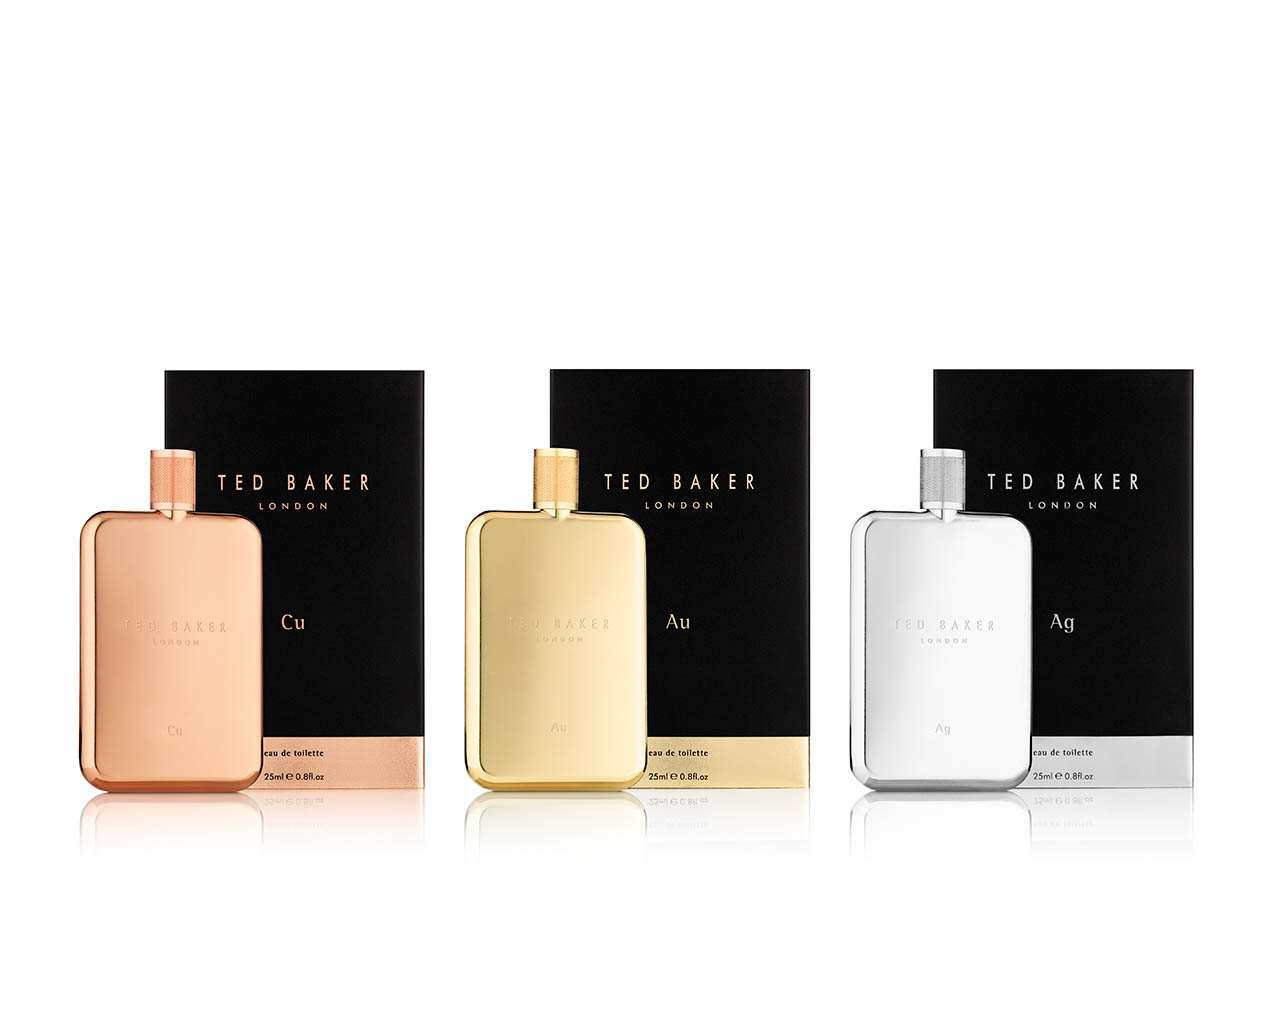 Packshot Factory - Packaging - Ted Baker fragrance bottles and boxes